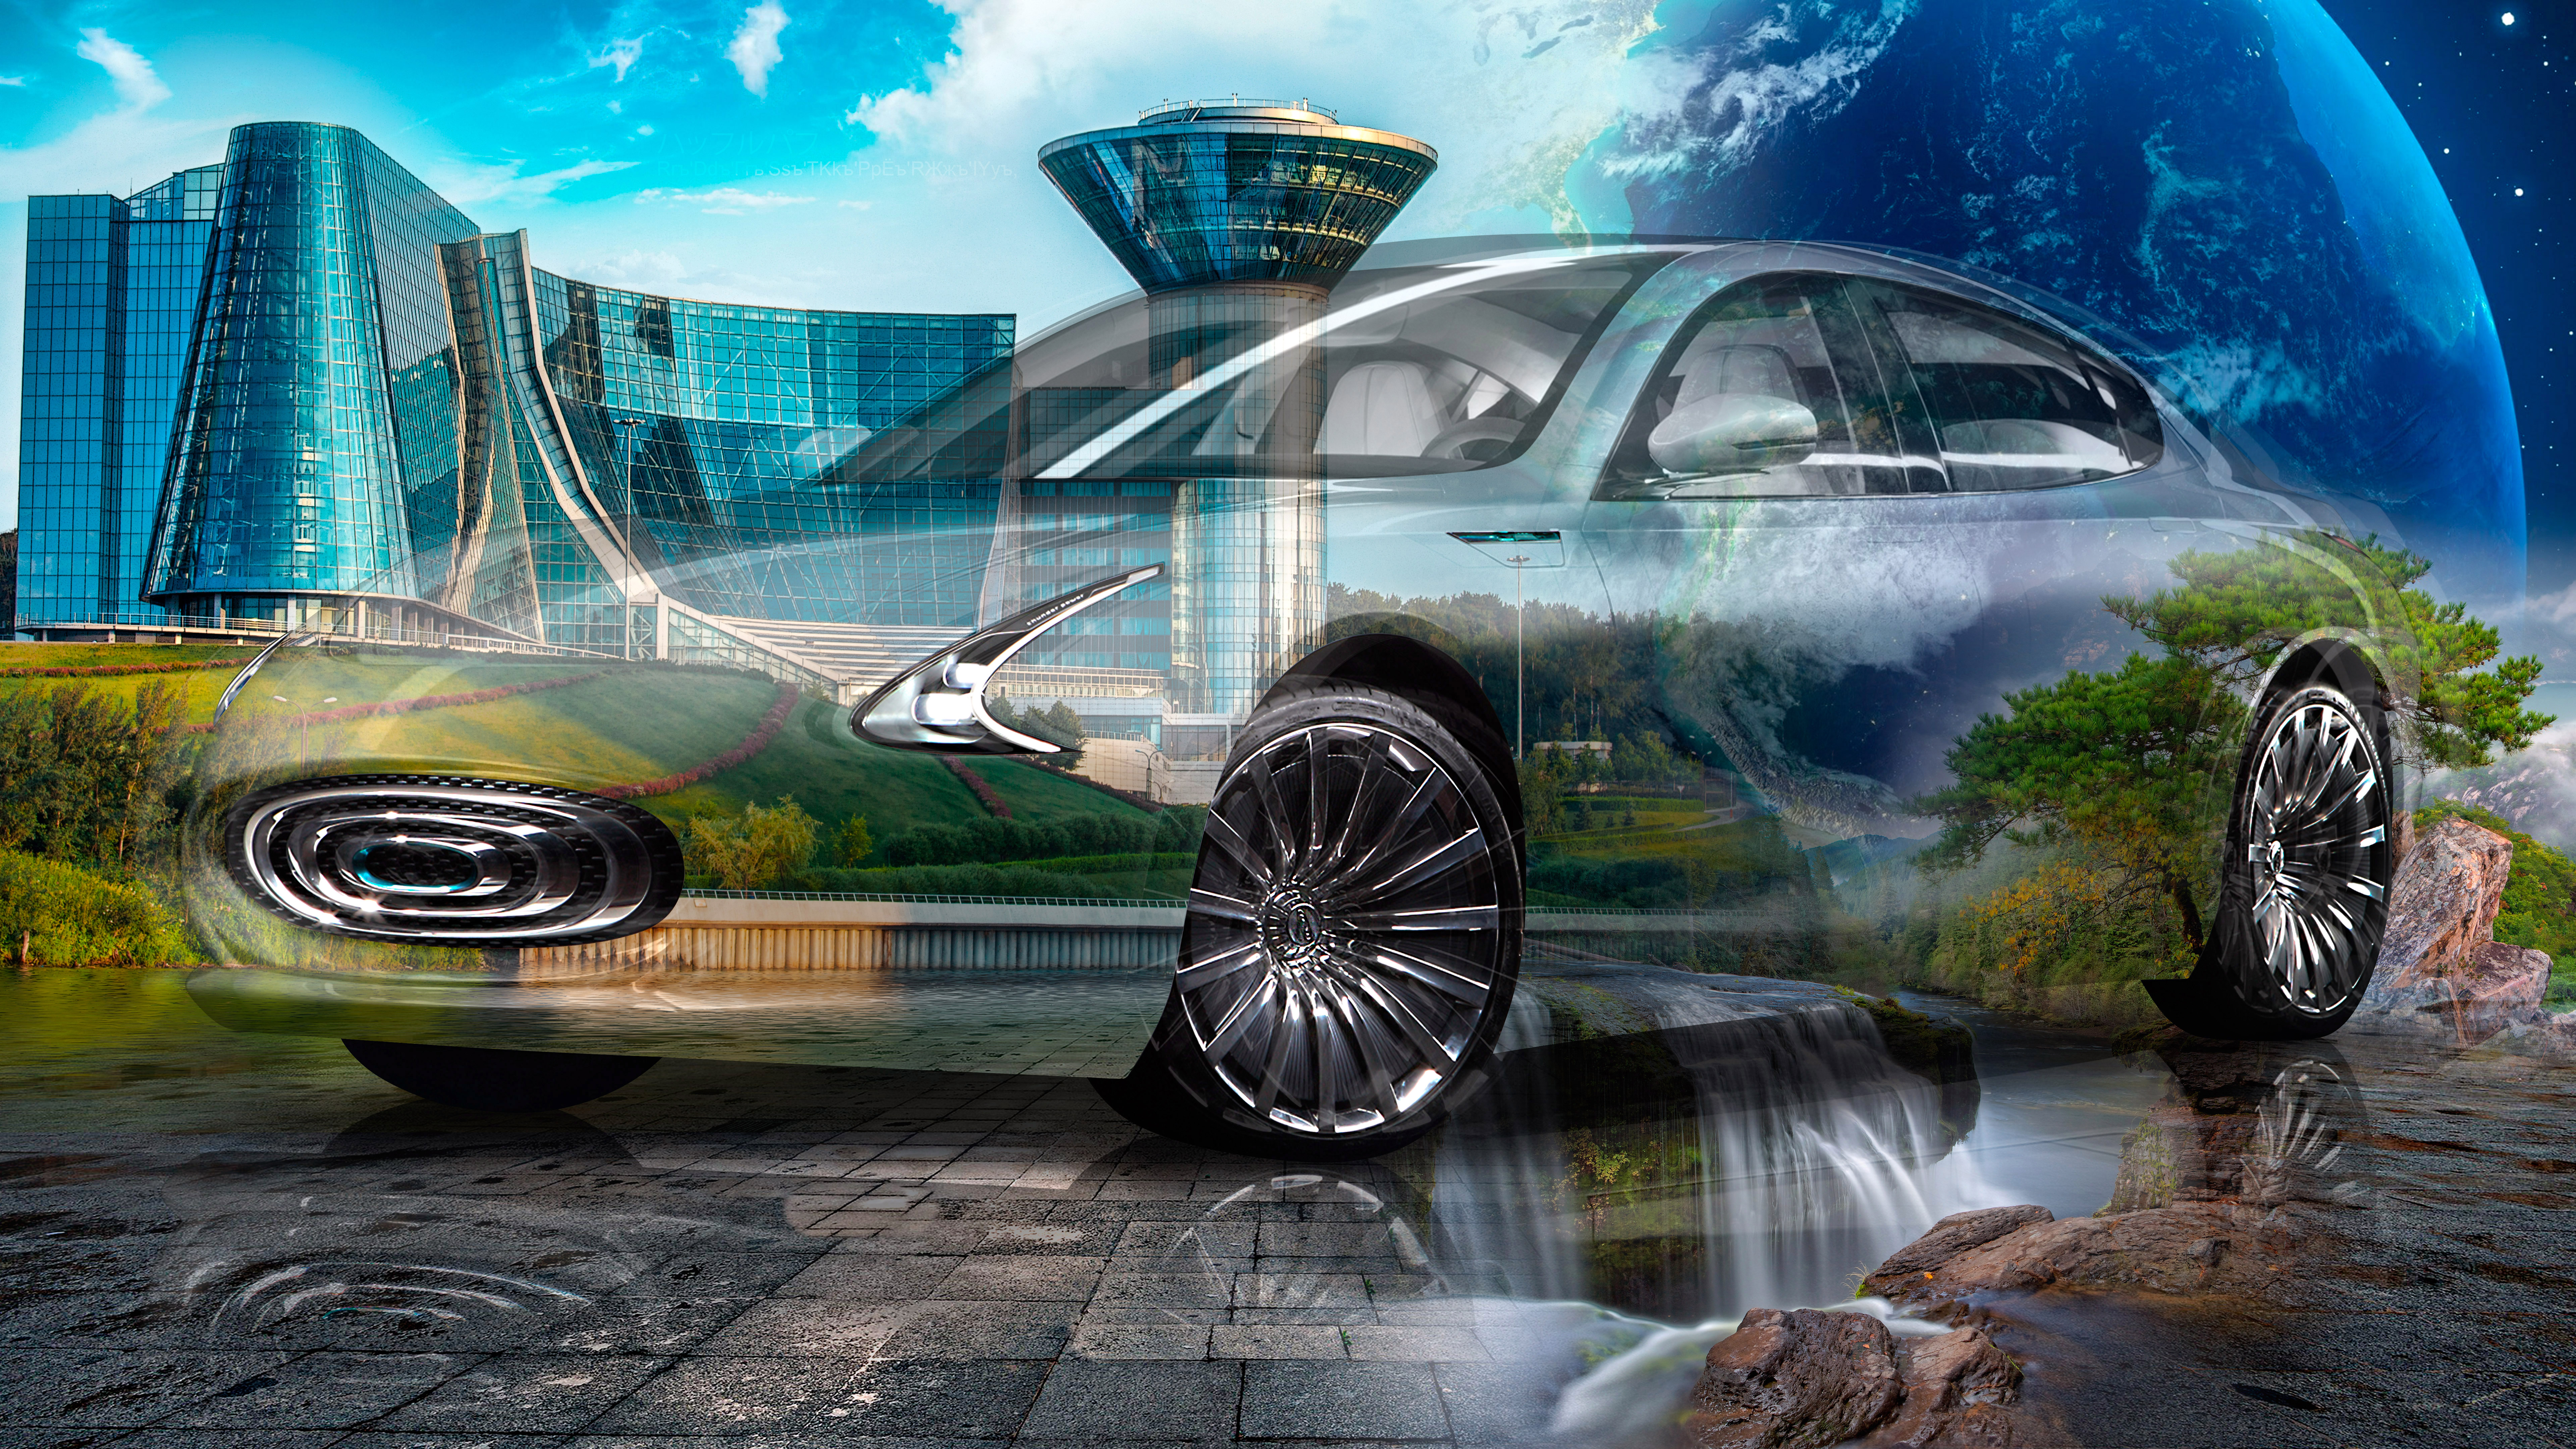 Thunder-Power-Sedan-Super-Crystal-Hufflepuff-Krasnogorsk-Planet-Earth-Nature-Car-2023